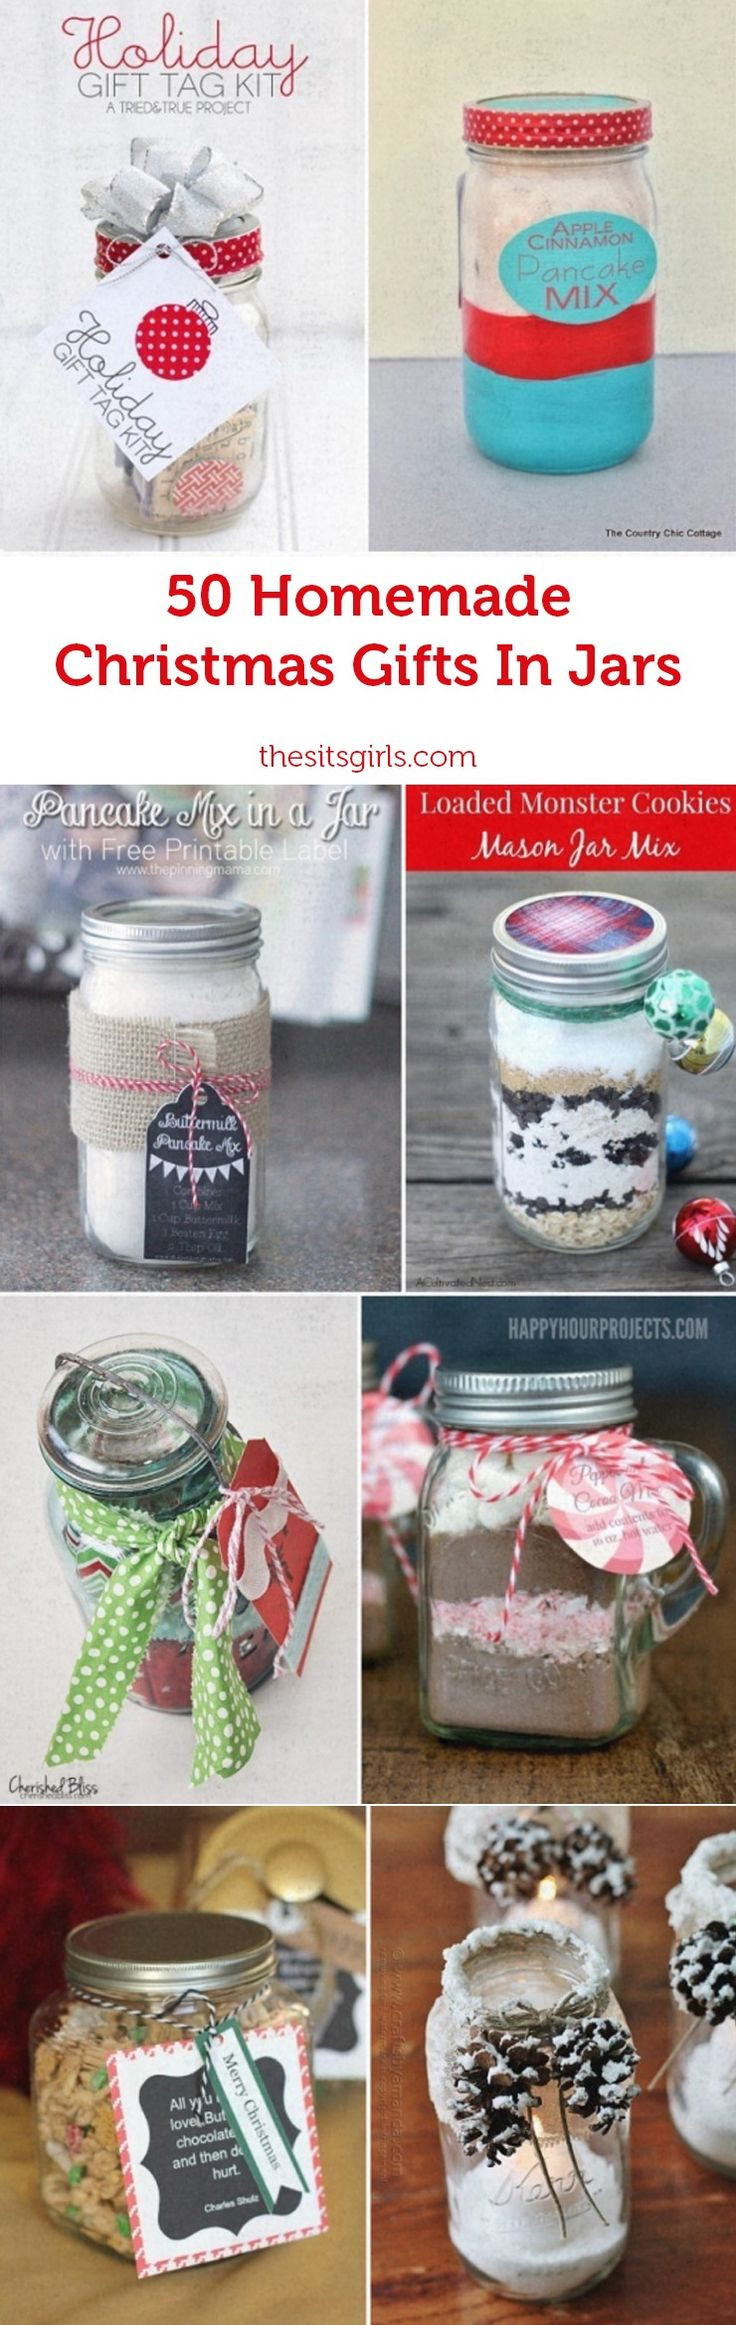 Girlfriend Christmas Gift Ideas
 1000 ideas about Girlfriend Christmas Gifts on Pinterest